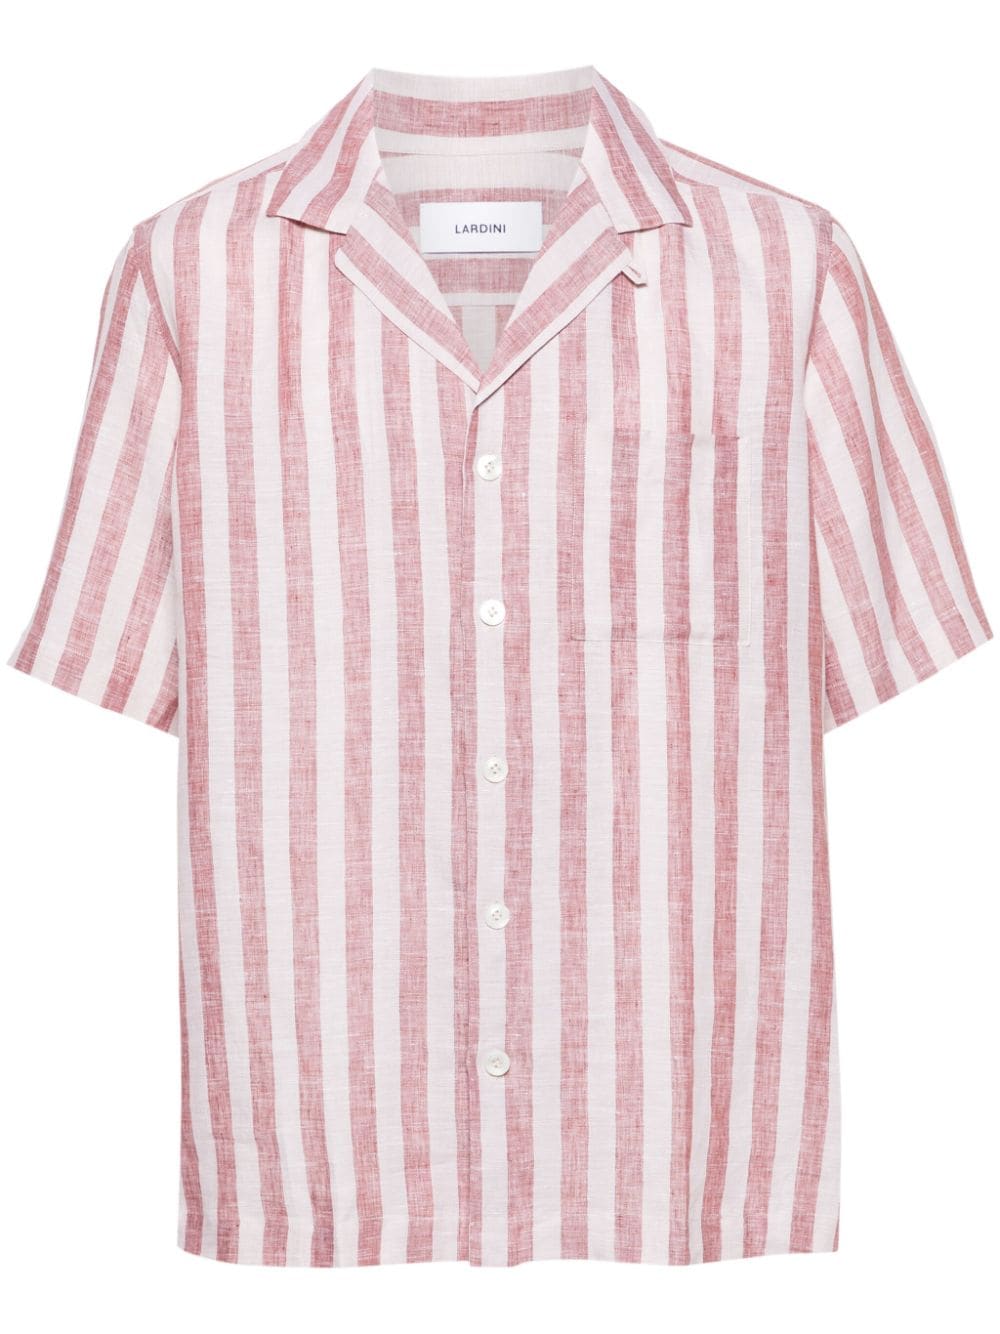 Lardini striped linen shirt - Marrone